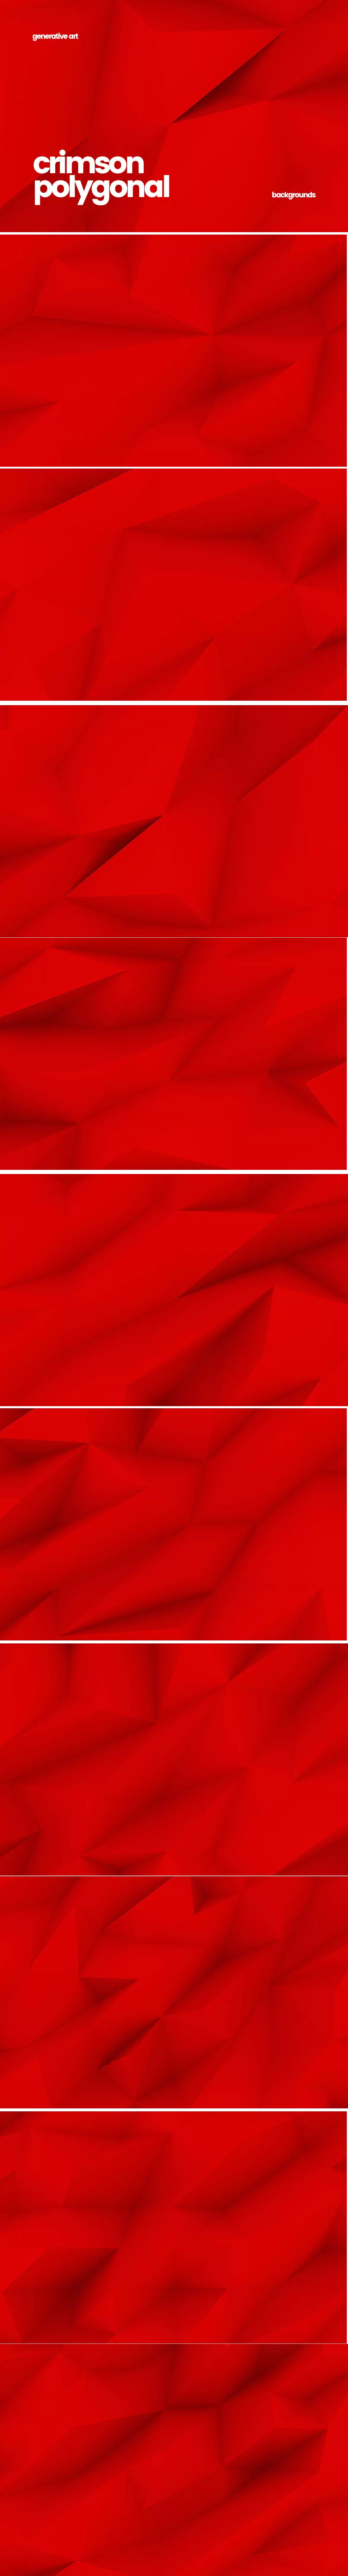 Crimson Polygon Background Unlimiteds Background